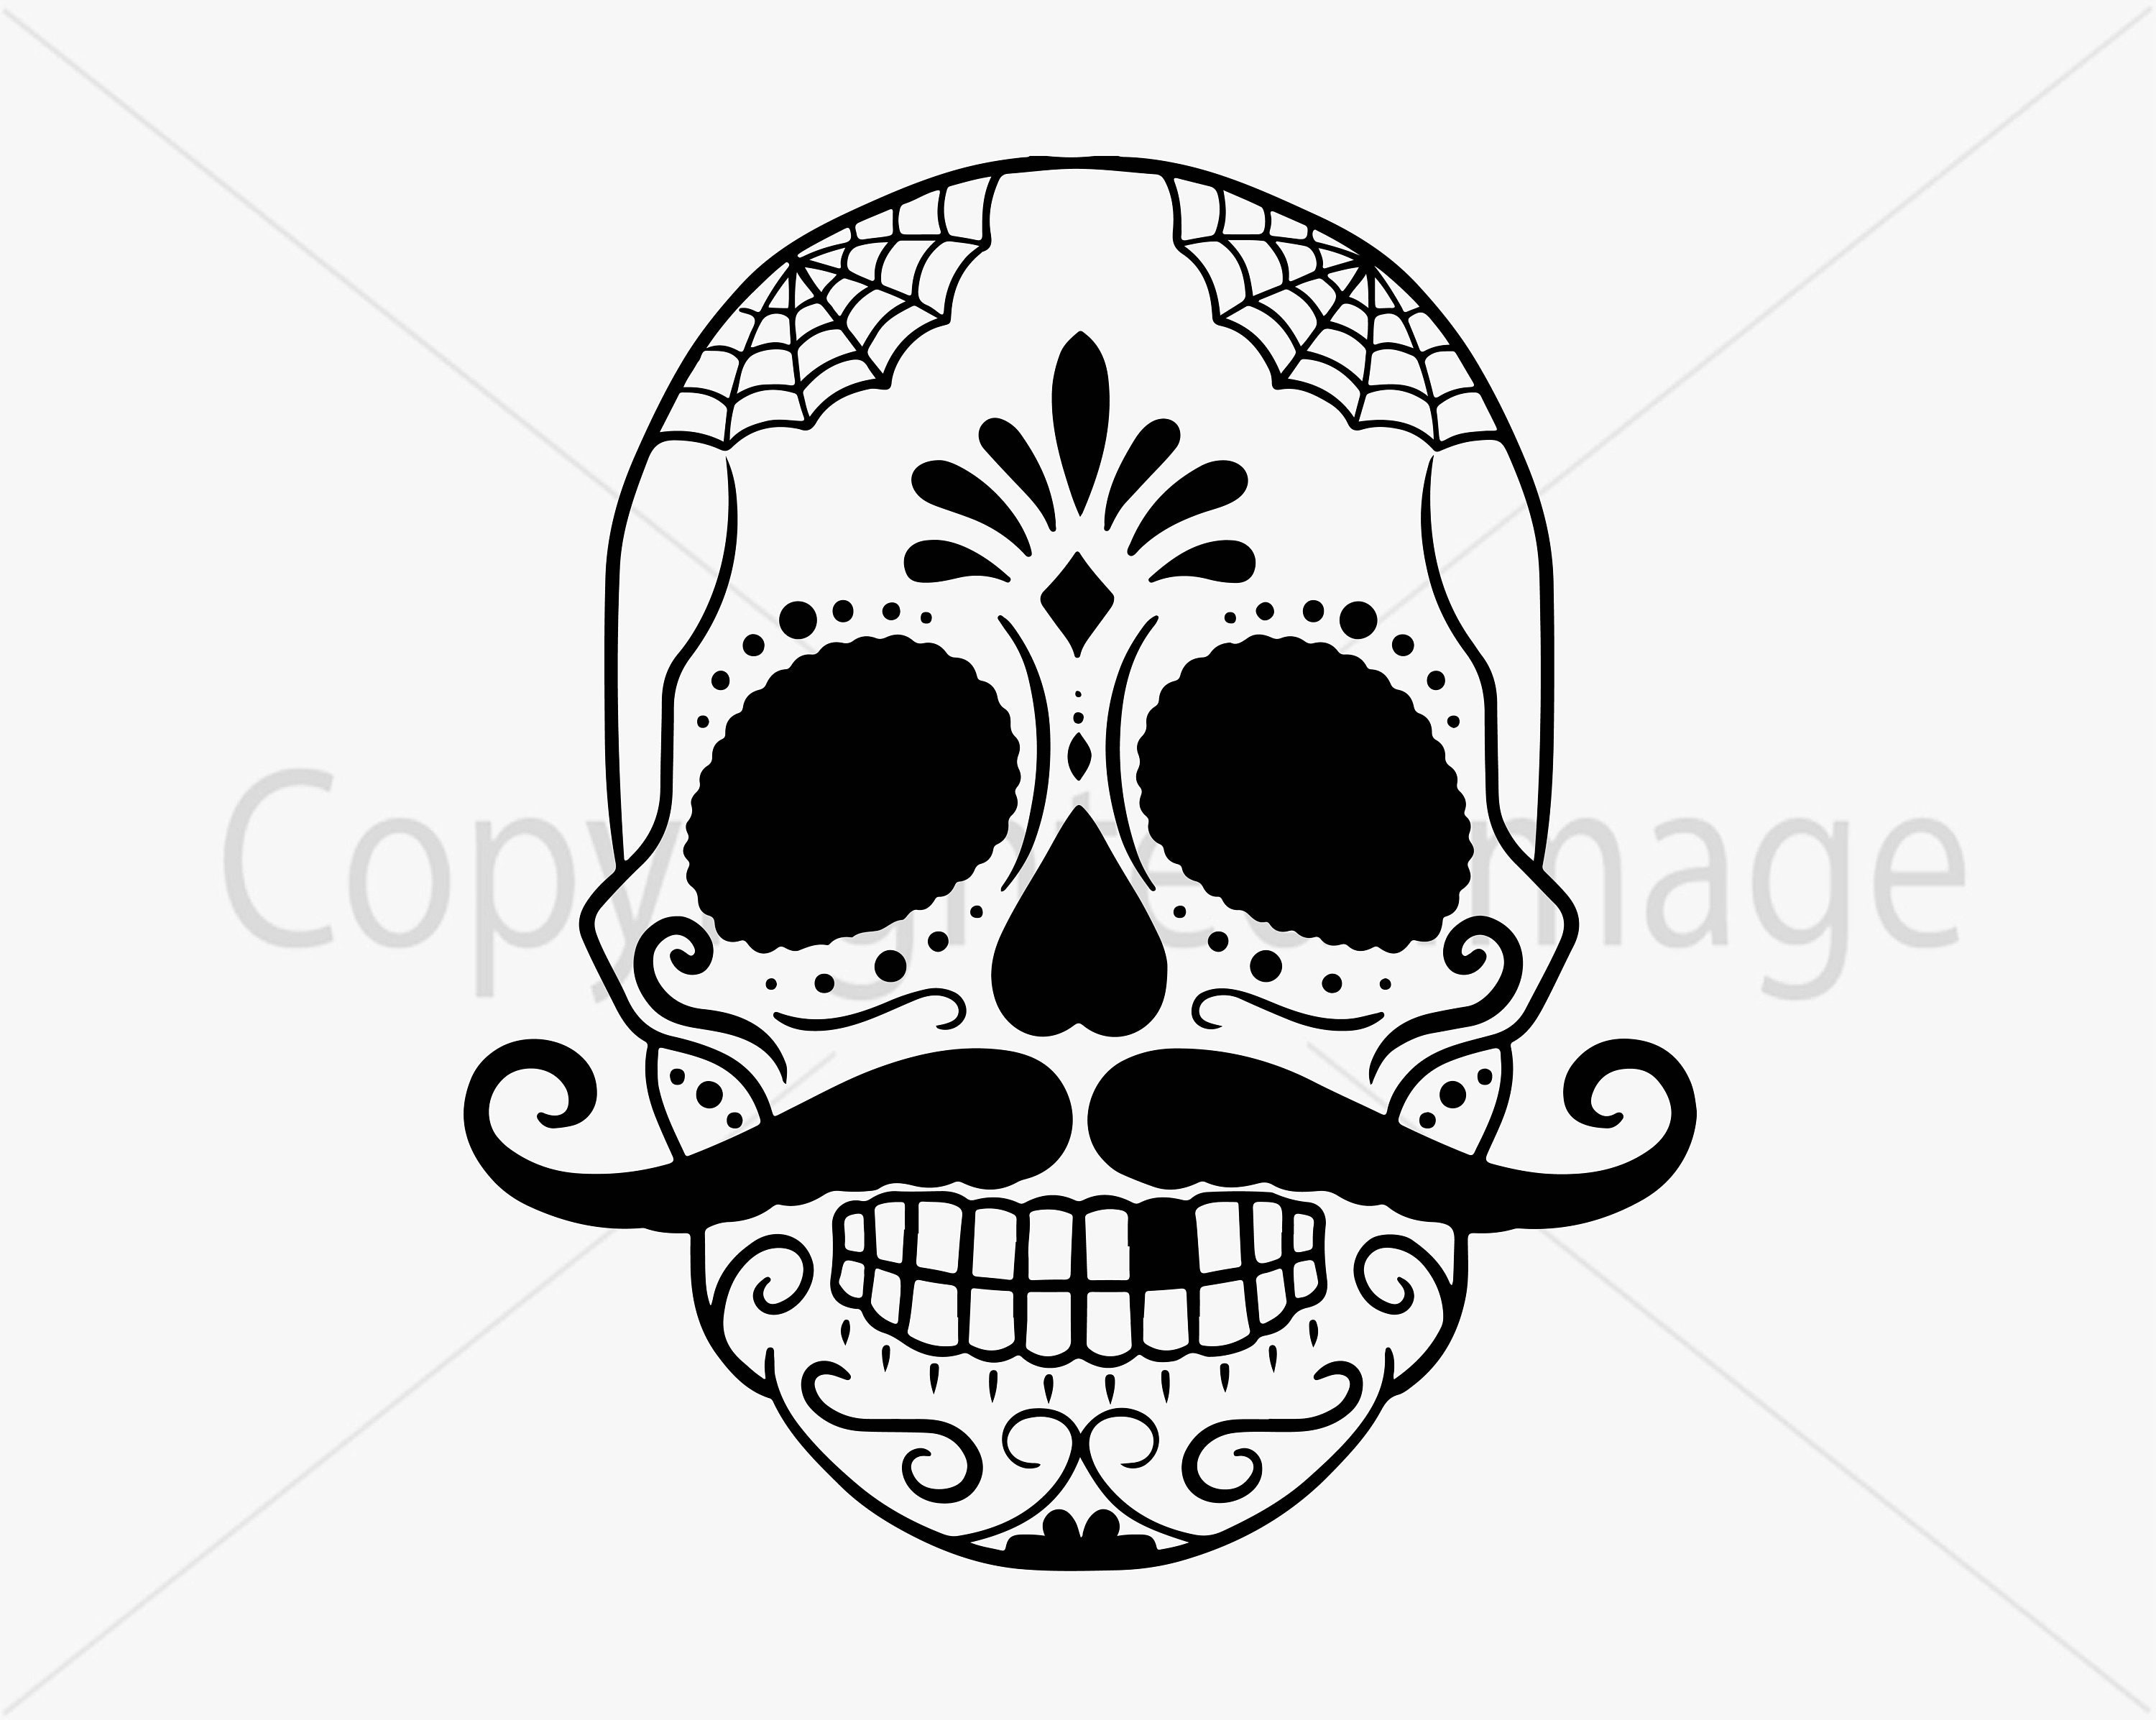 SUGAR SKULL SVG, Dxf, Eps & Png. Digital Cut Files for Cricut, Silhouette;  Sugar Skull, Day of the Dead,Mexico, Skull Tattoo, Halloween Mask